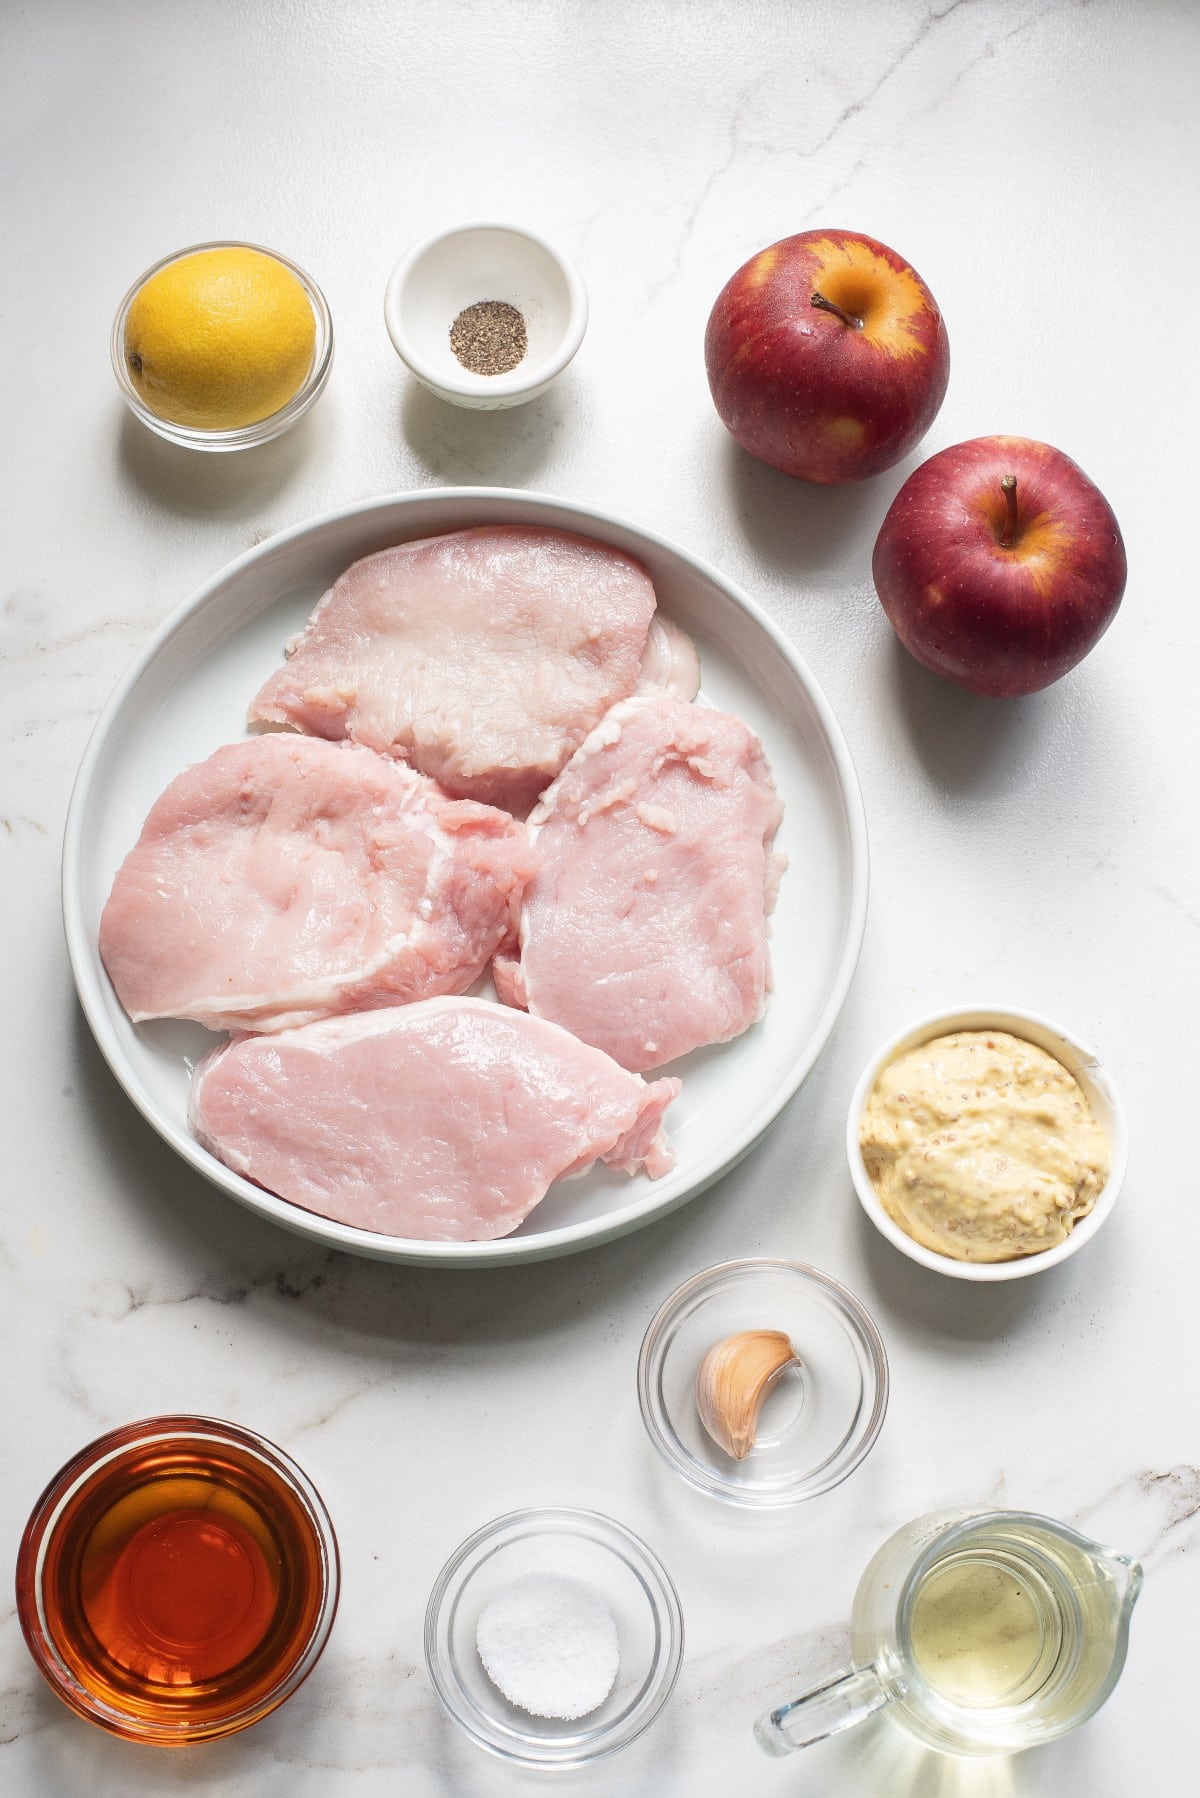 Ingredients for Apple Pork Chops. 